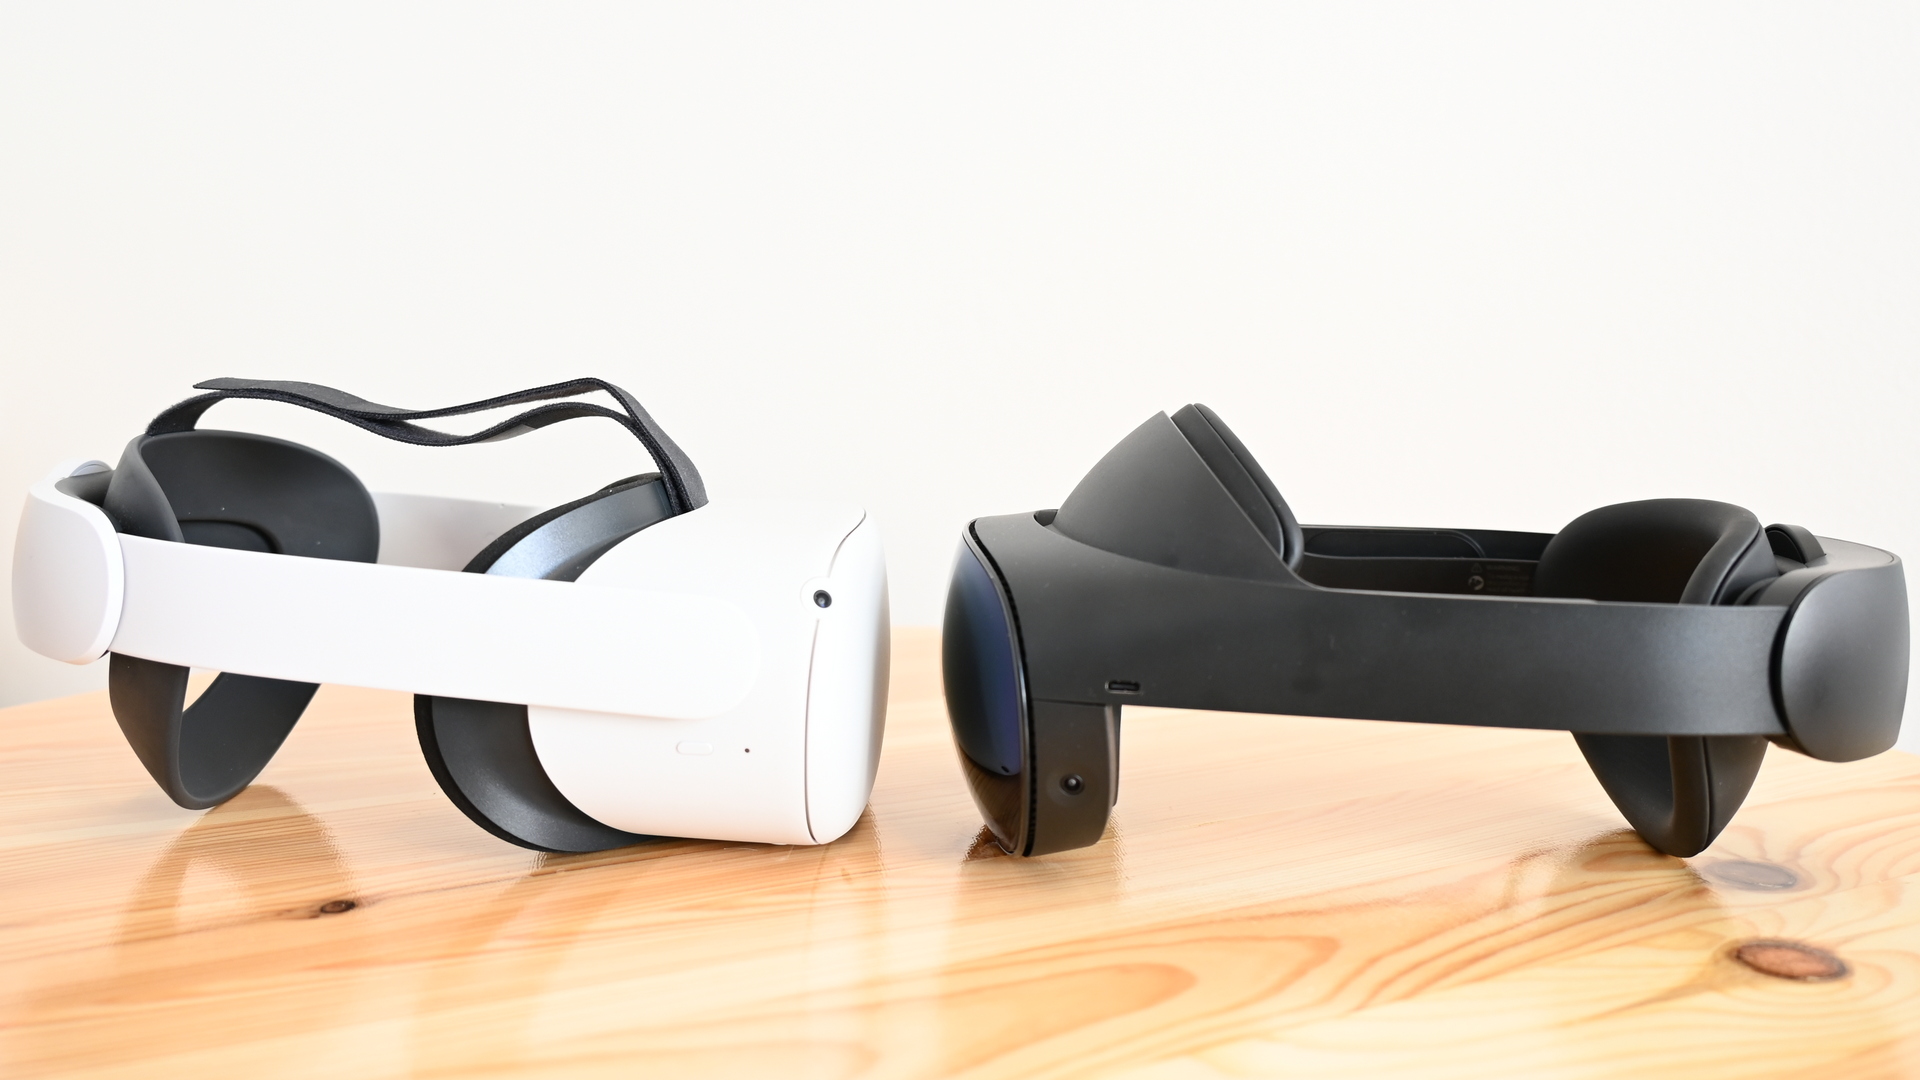 Meta is now selling VR headsets in Germany again